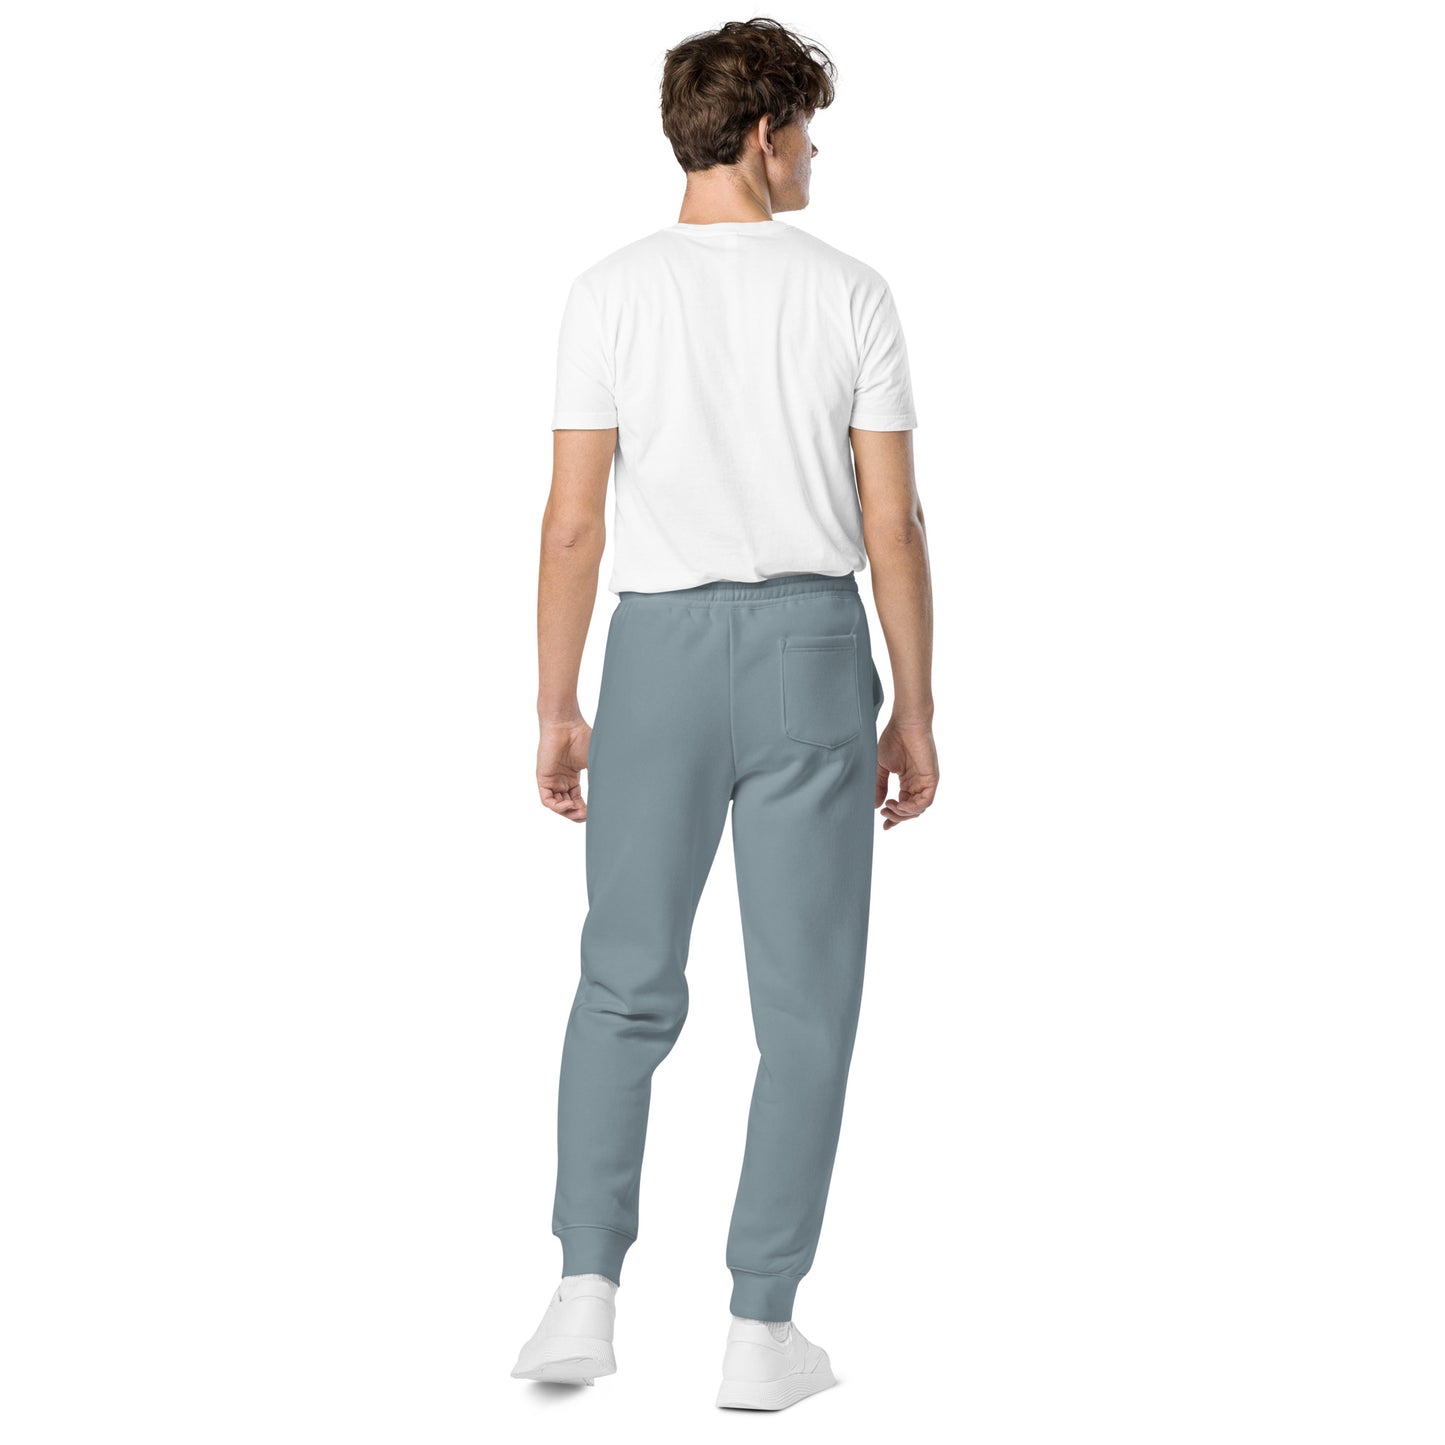 New York City - Unisex pigment-dyed sweatpants